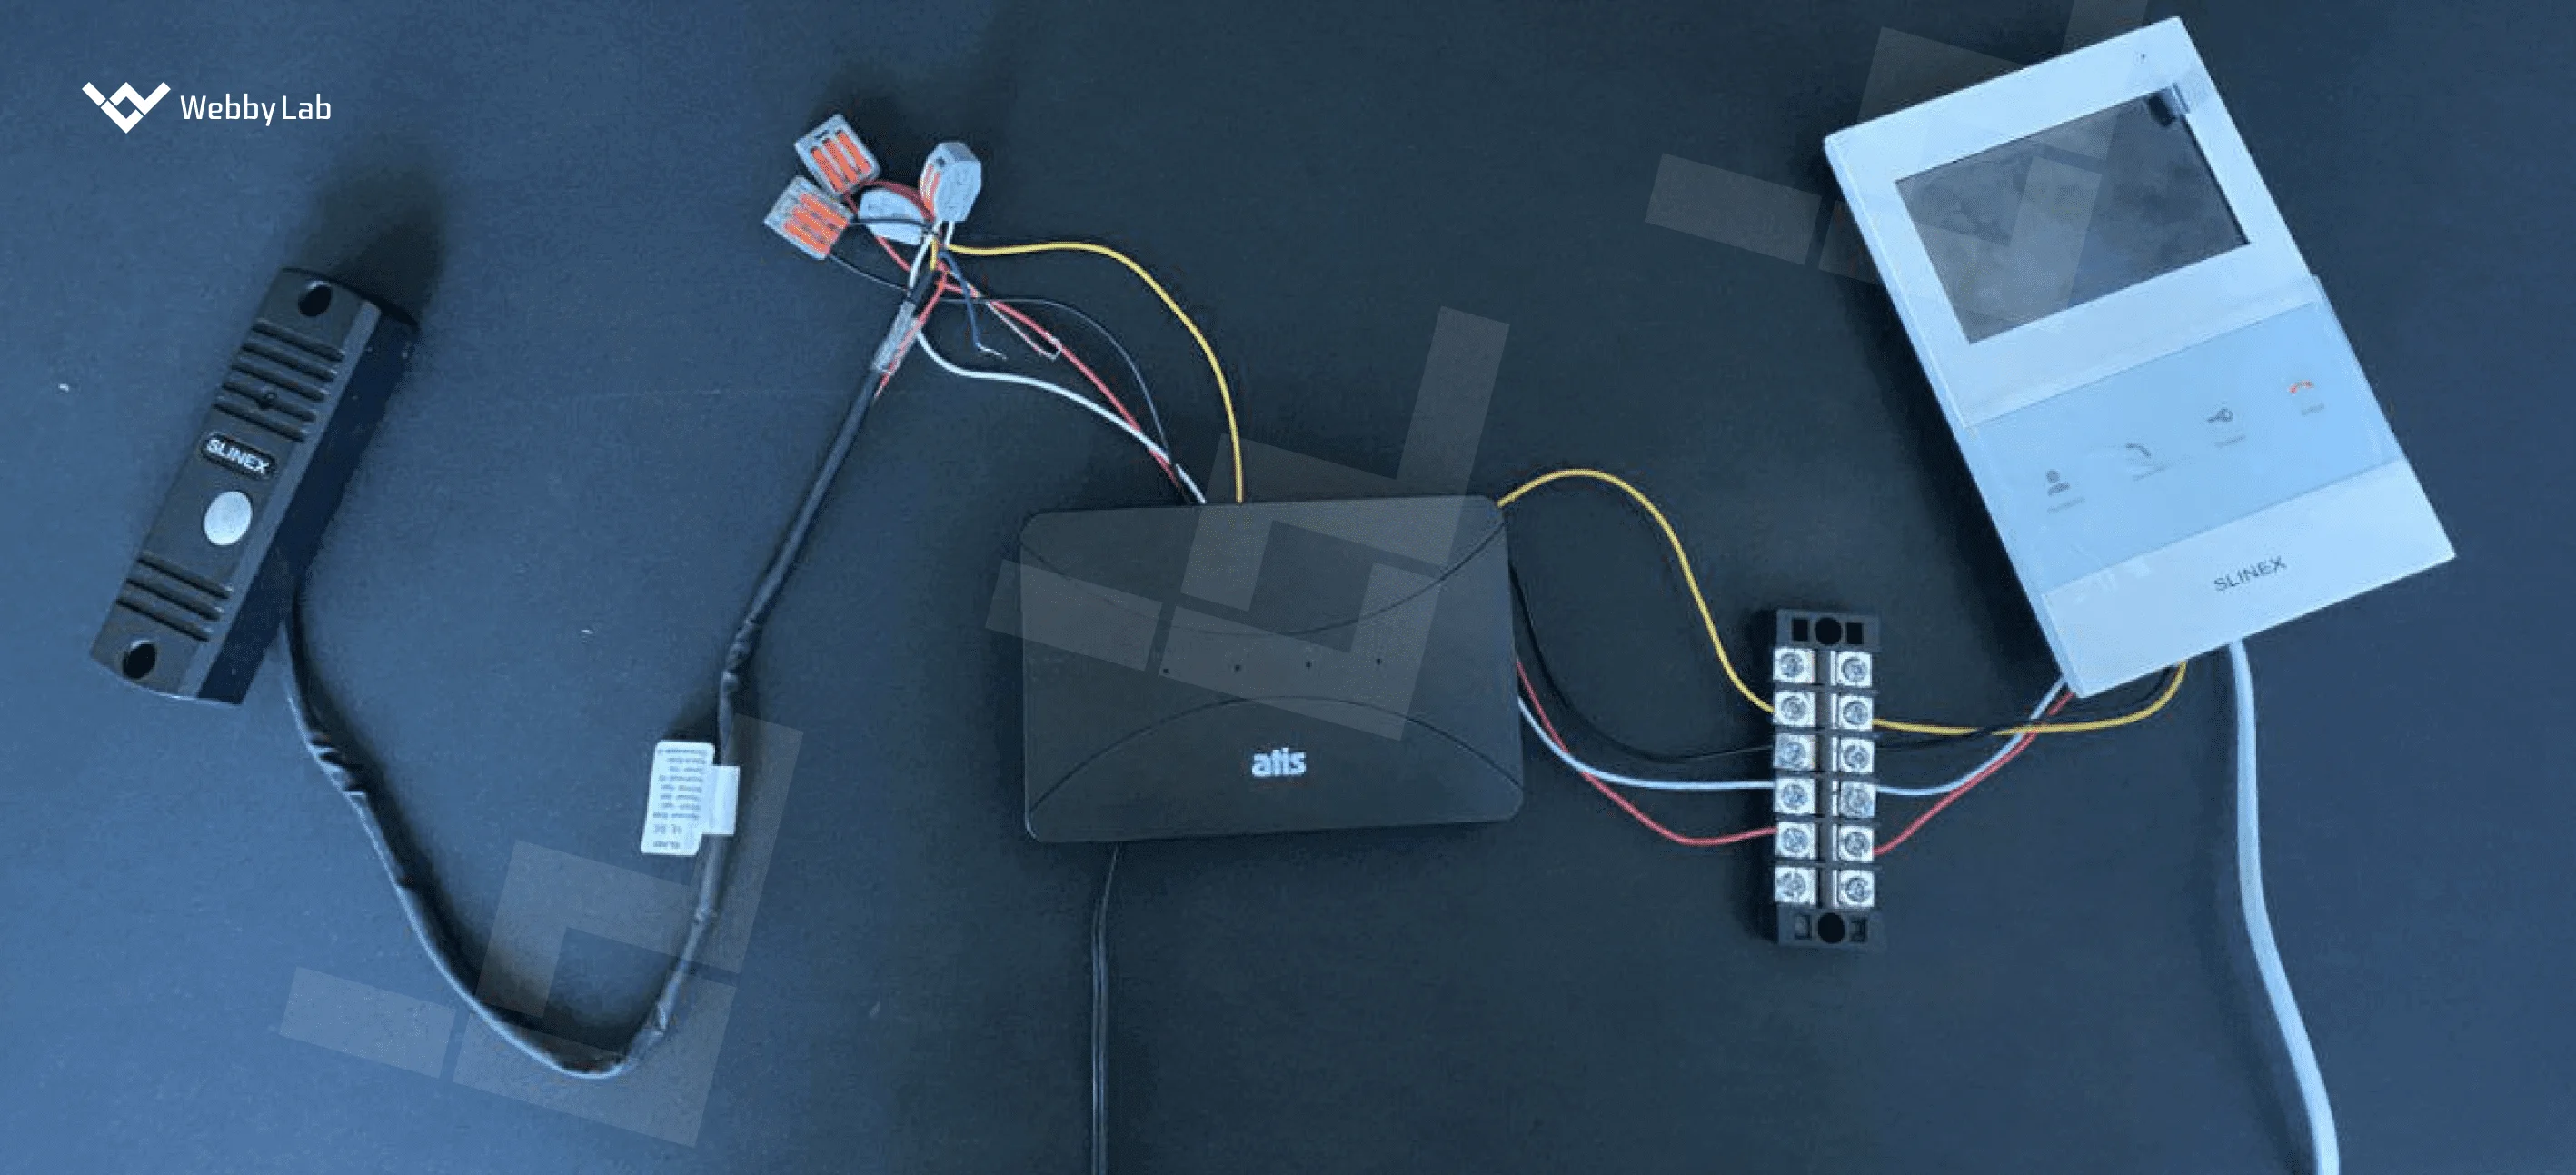 The prototype of the analog intercom converter created by WebbyLab